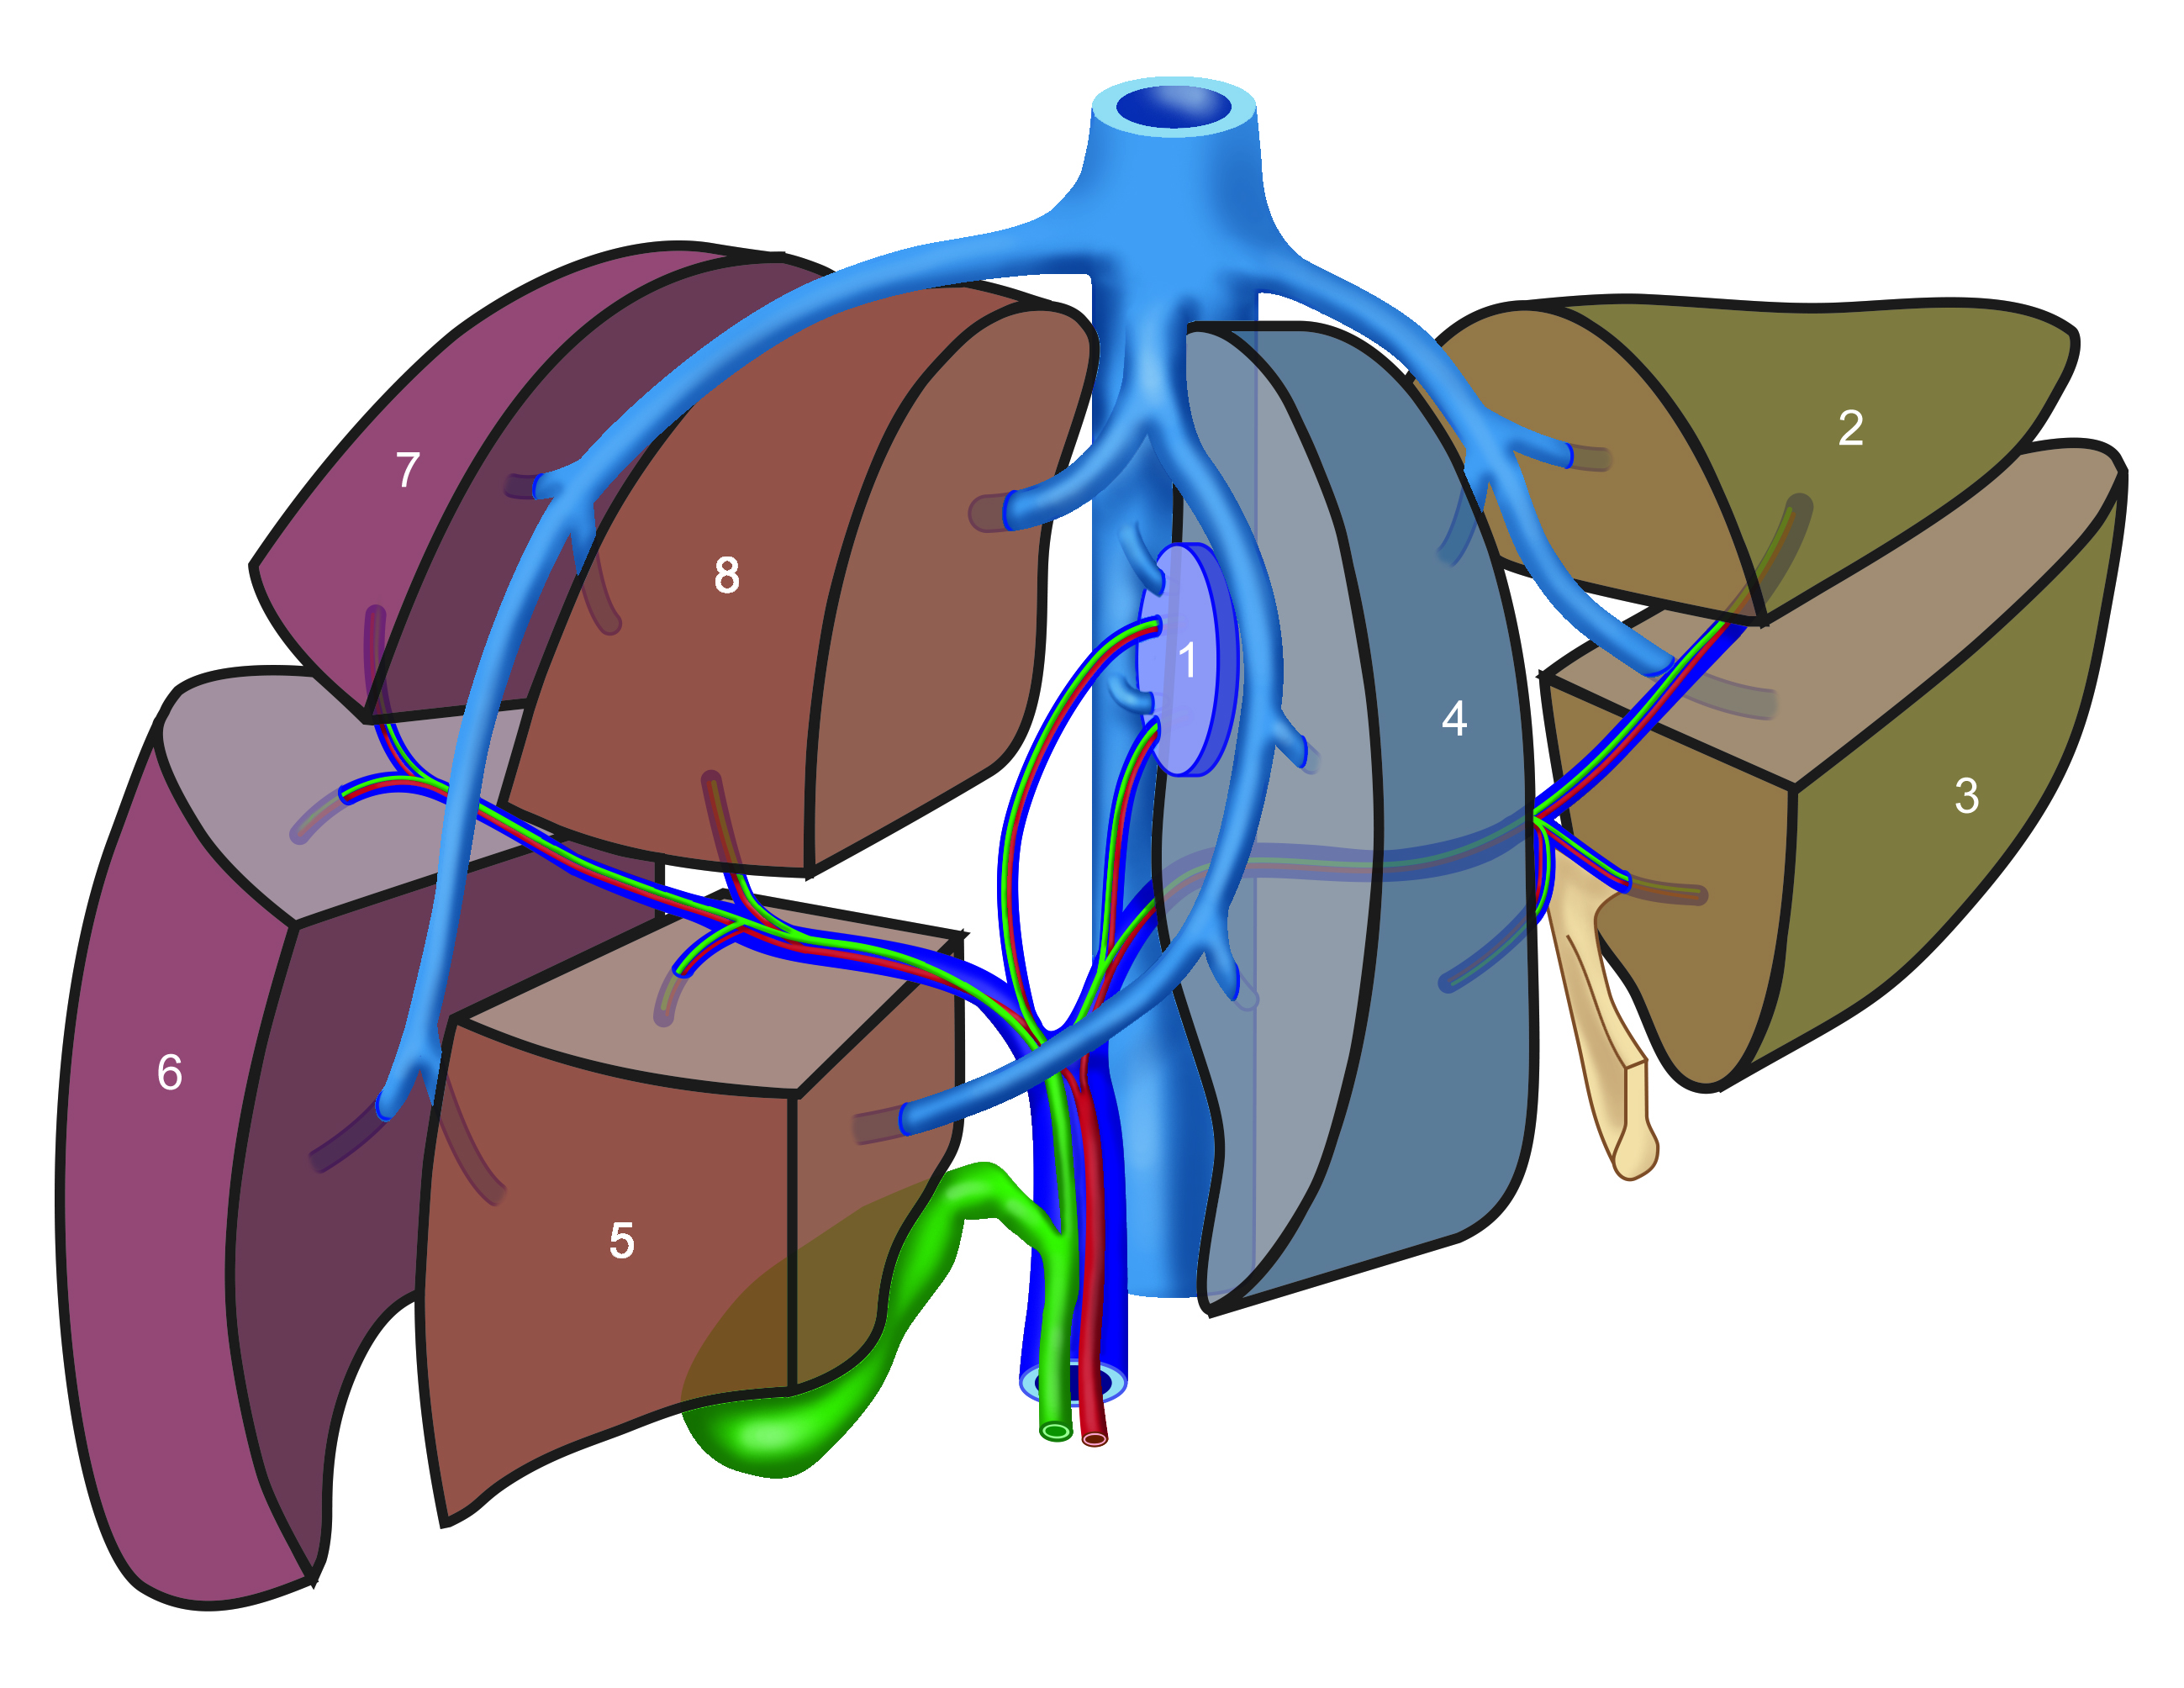 Liver segments and vascularisation